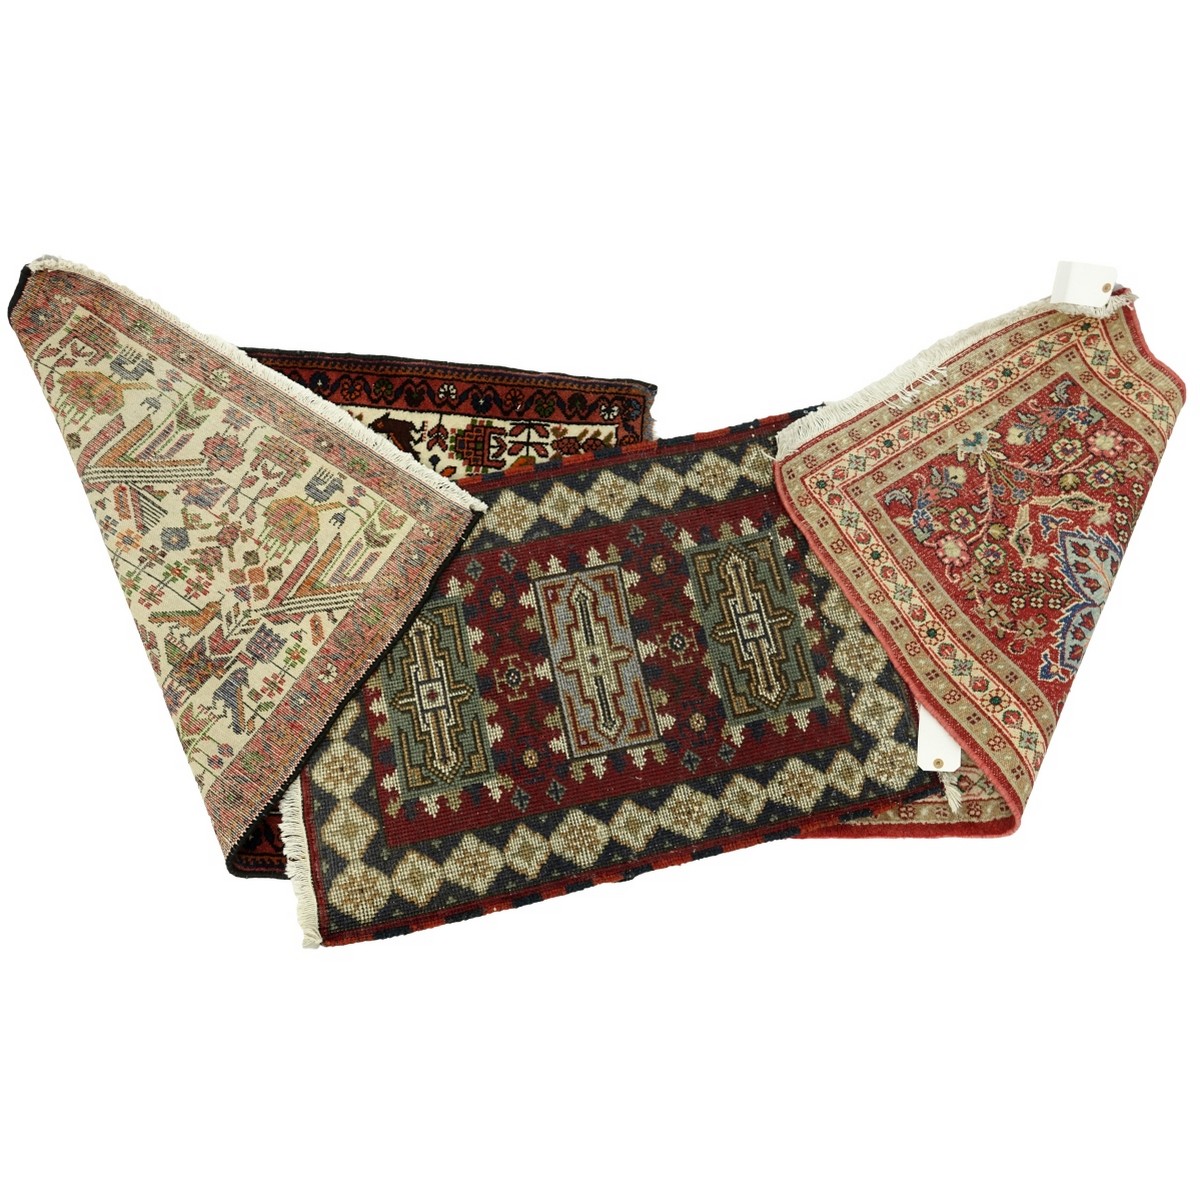 Three (3) Small Oriental Rugs